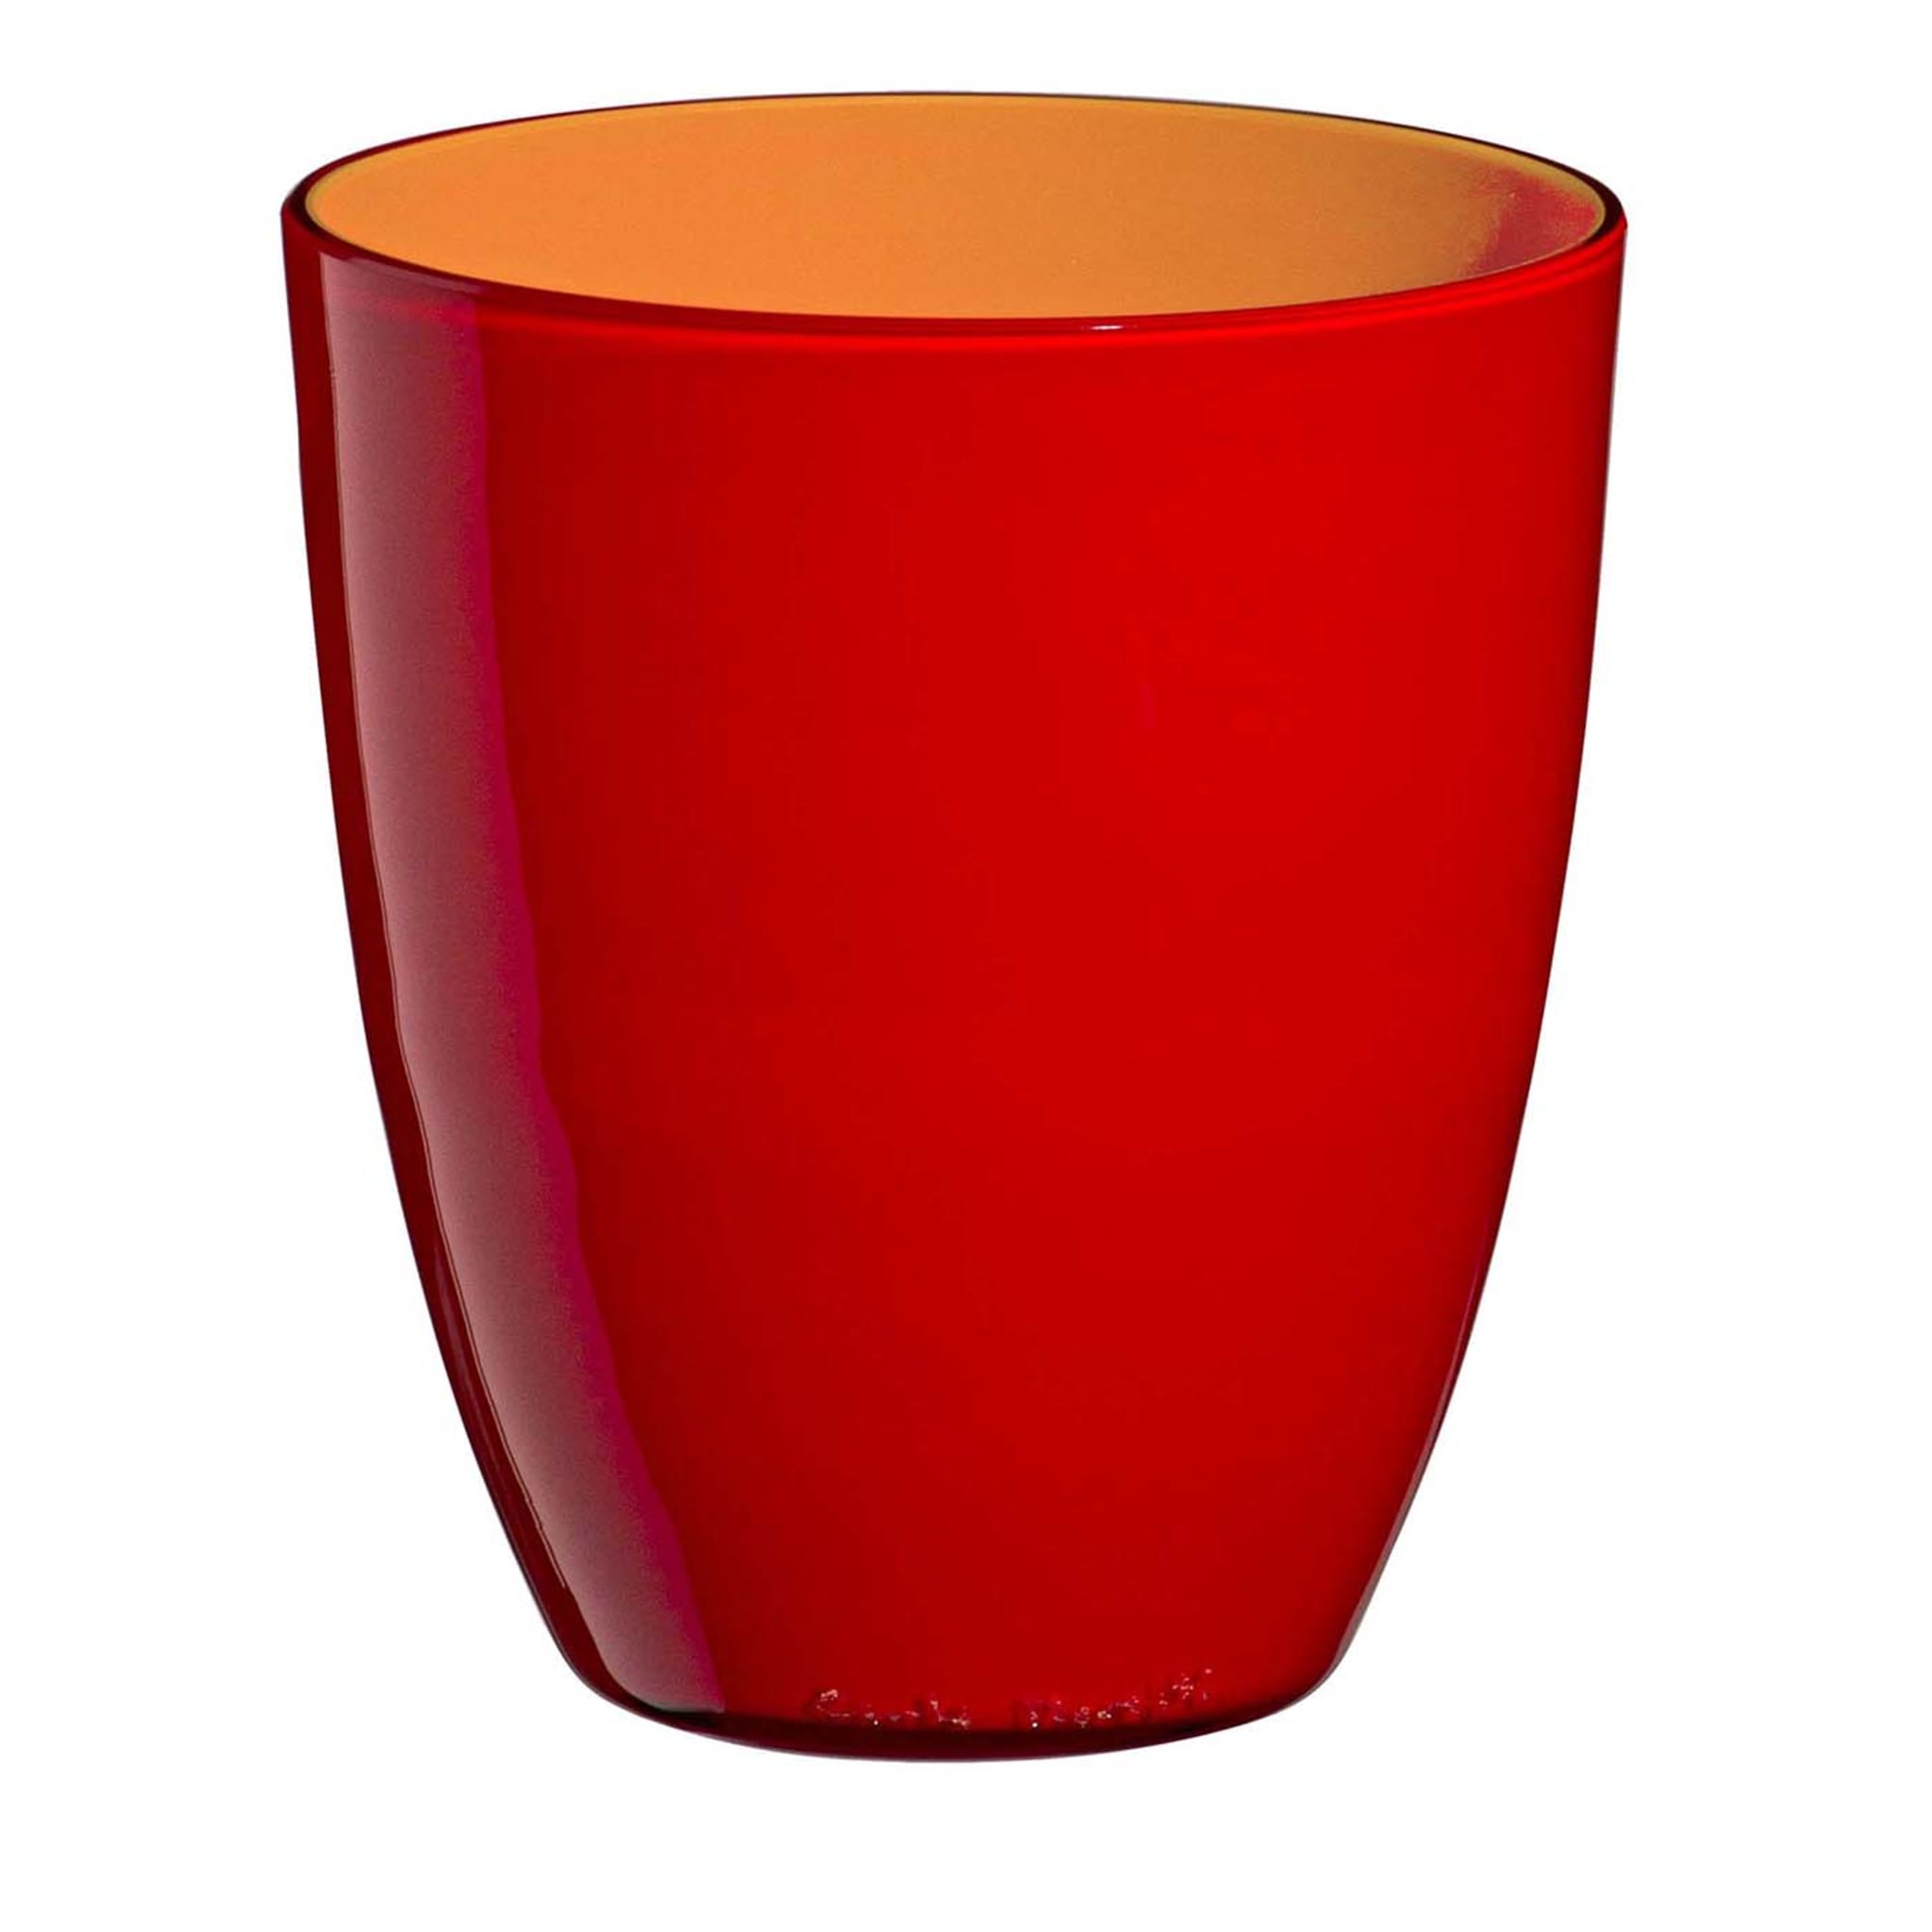 Pirus Red and Orange Glass by Carlo Moretti - Main view